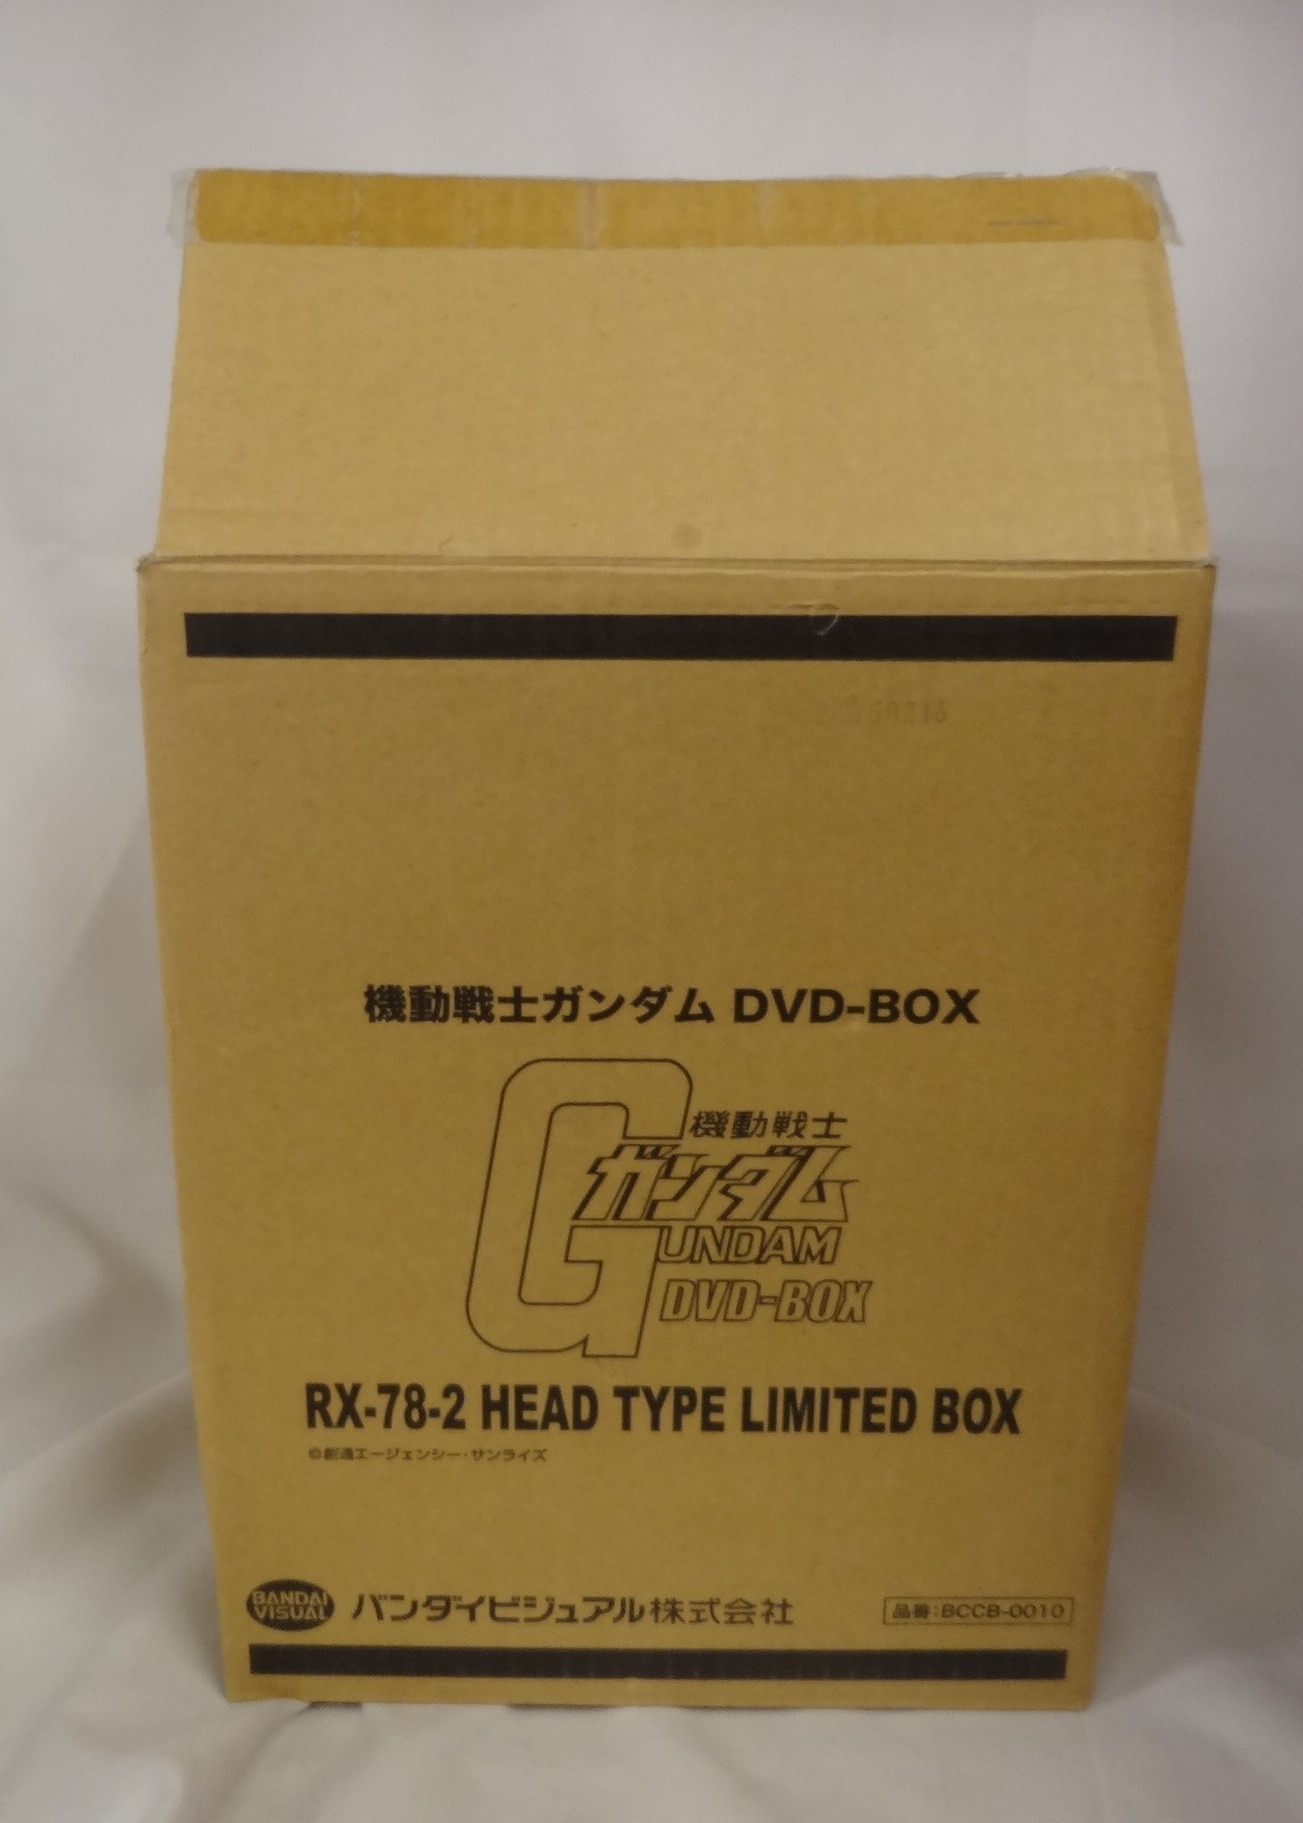 Bandai RX-78-2 head type limited BOX / DVD Bonus Item / Mobile